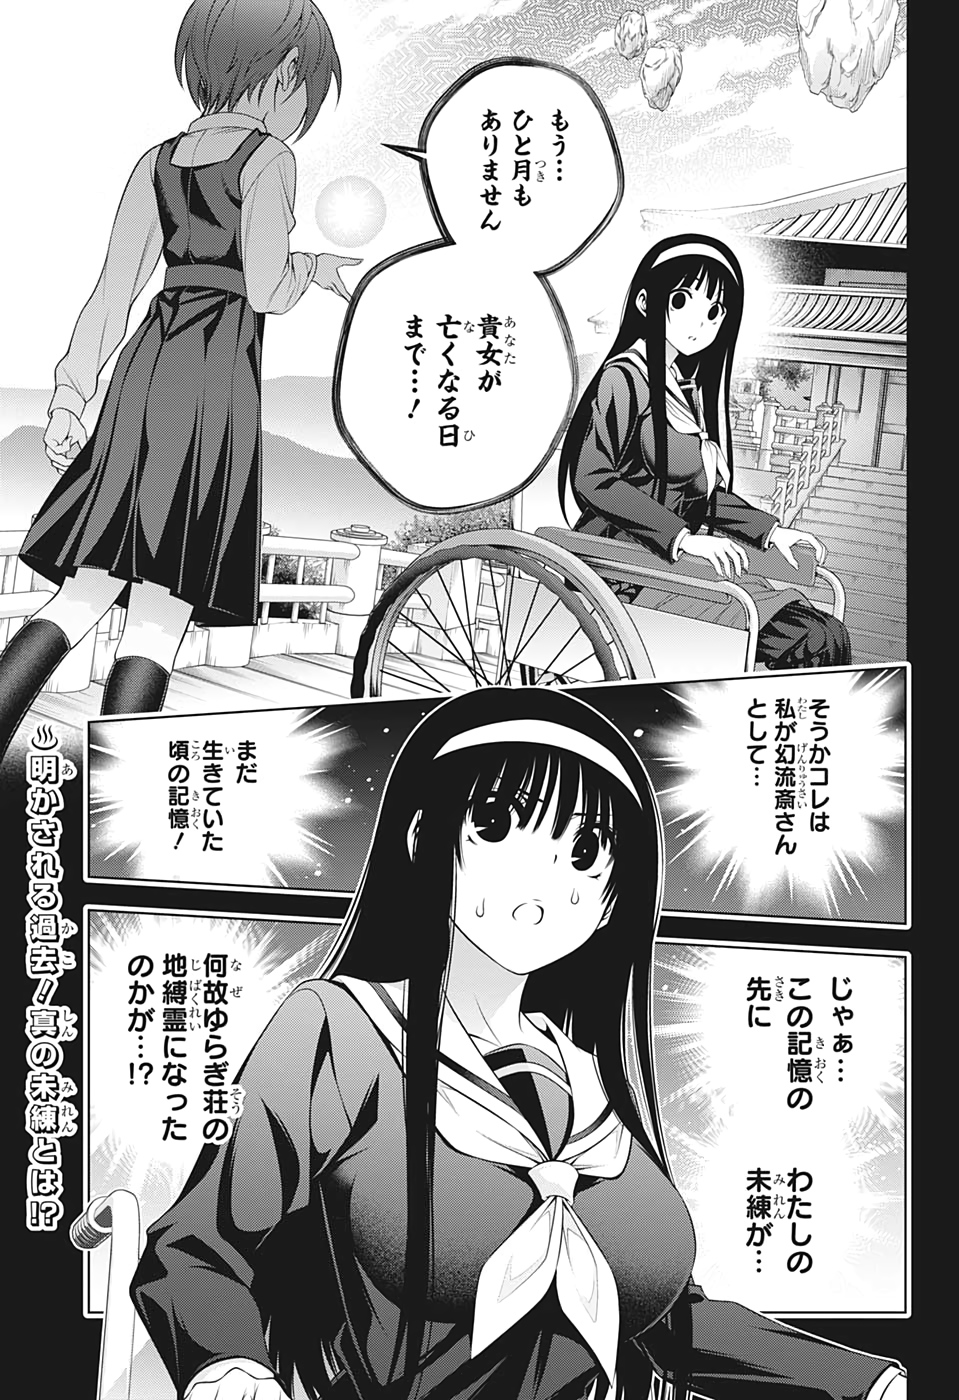 Yuragi-sou no Yuuna-san - ゆらぎ荘の幽奈さん - Chapter 204 - Page 19